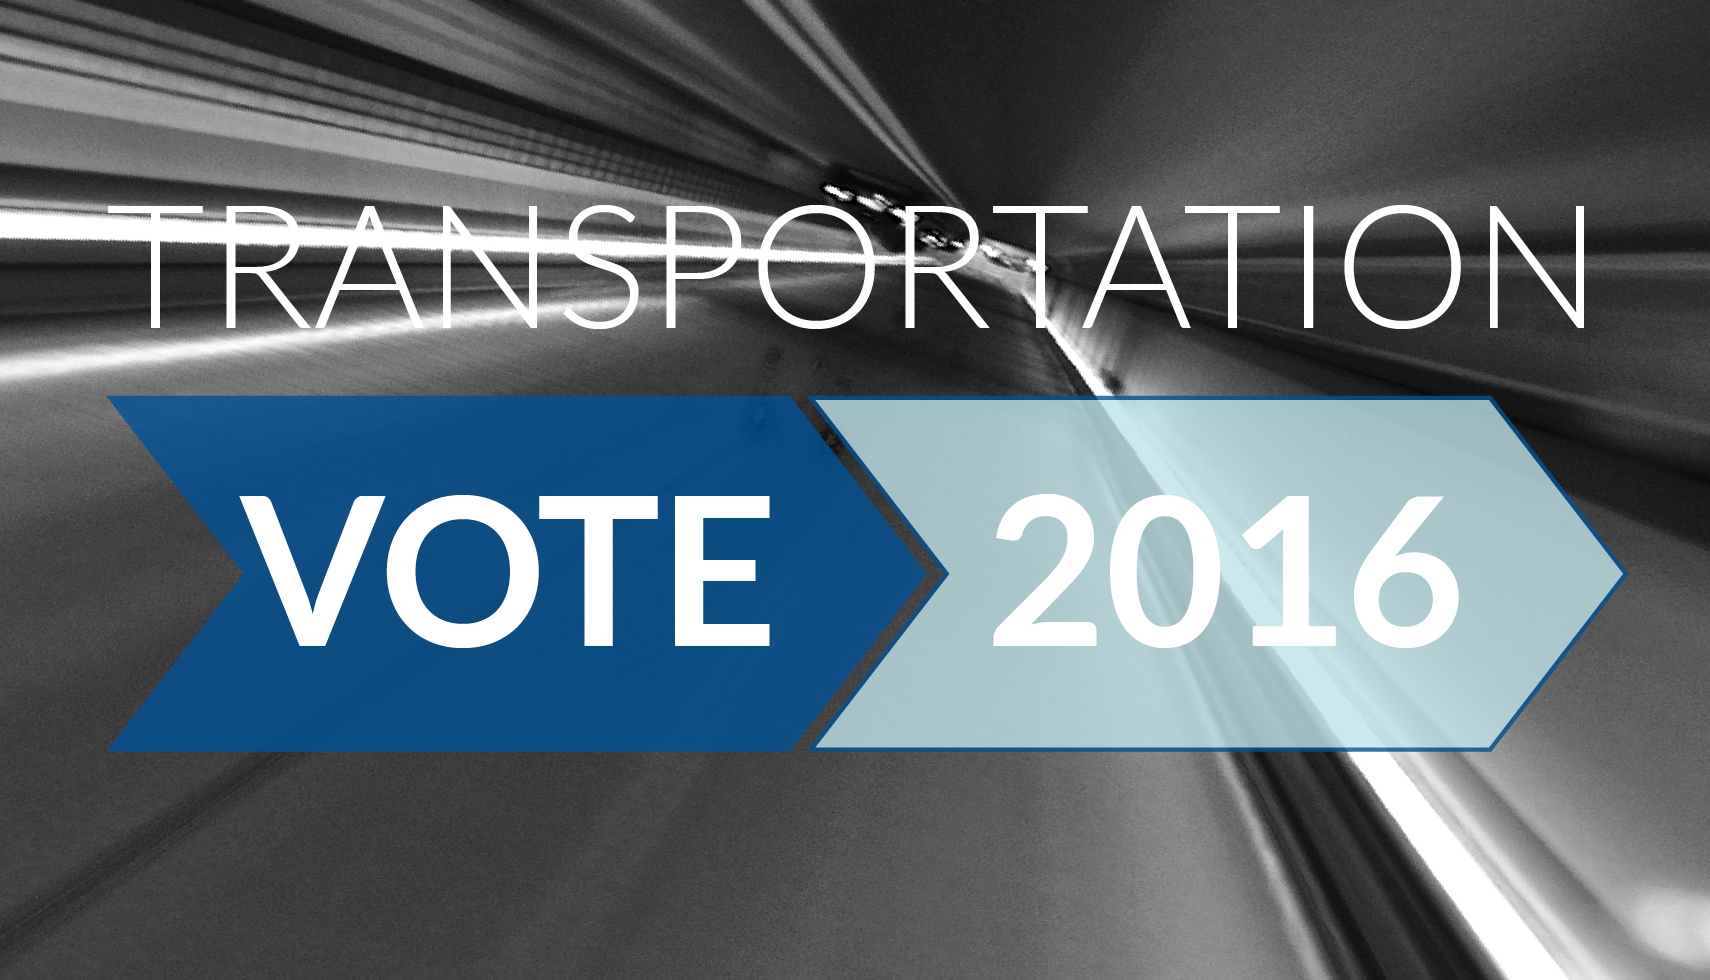 Transportation Vote 2016